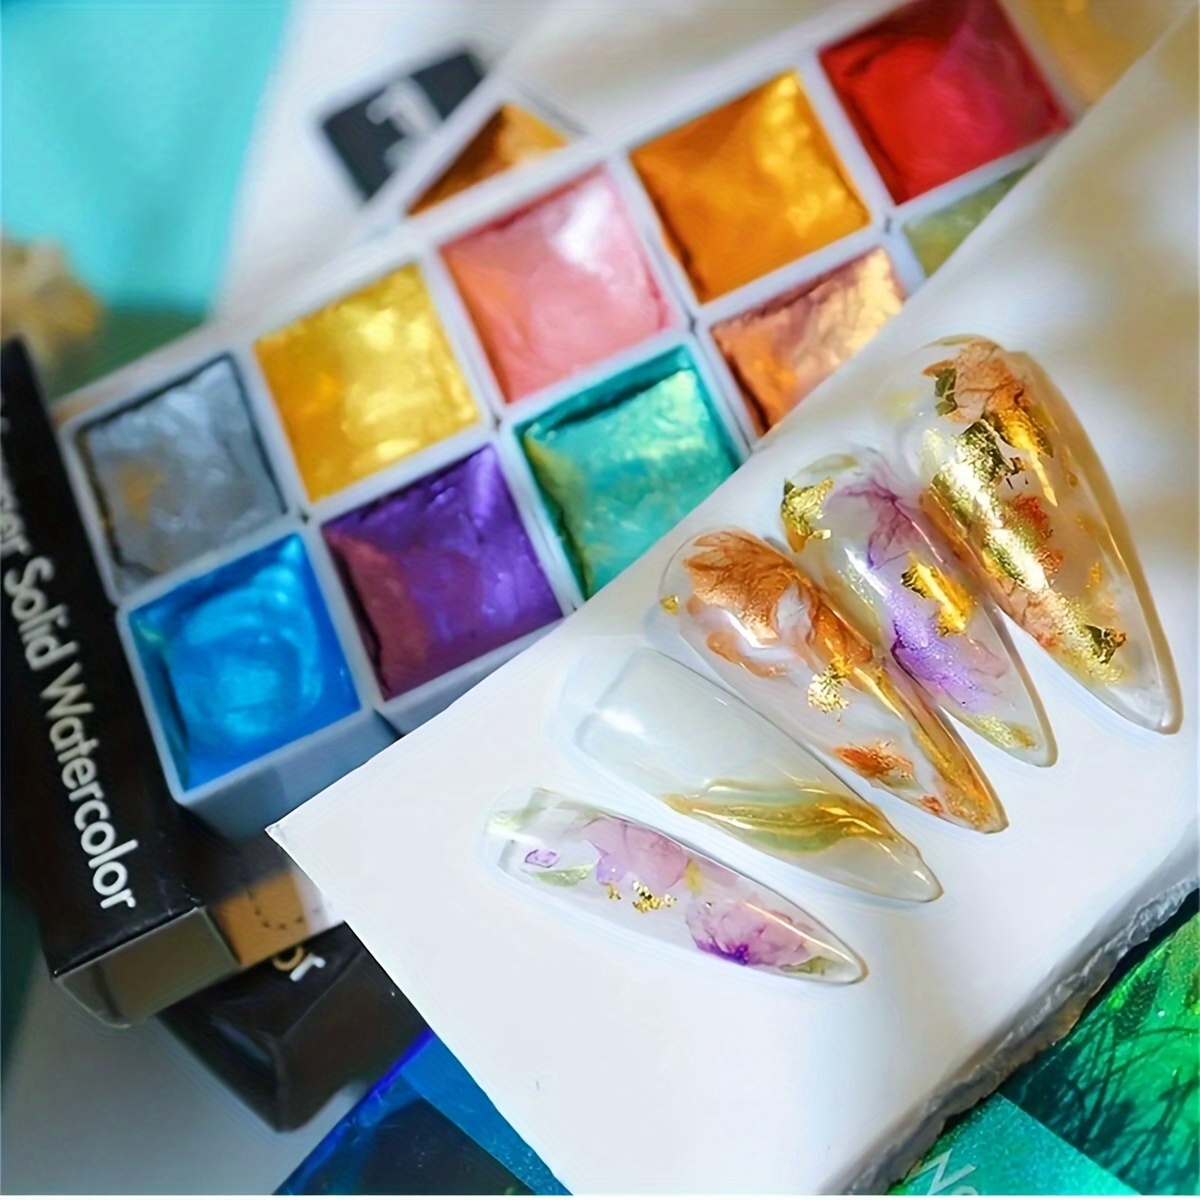 12 Colors Solid Watercolor Paints Set Pearlescent Pigment Metallic Glitter  Art Supplies